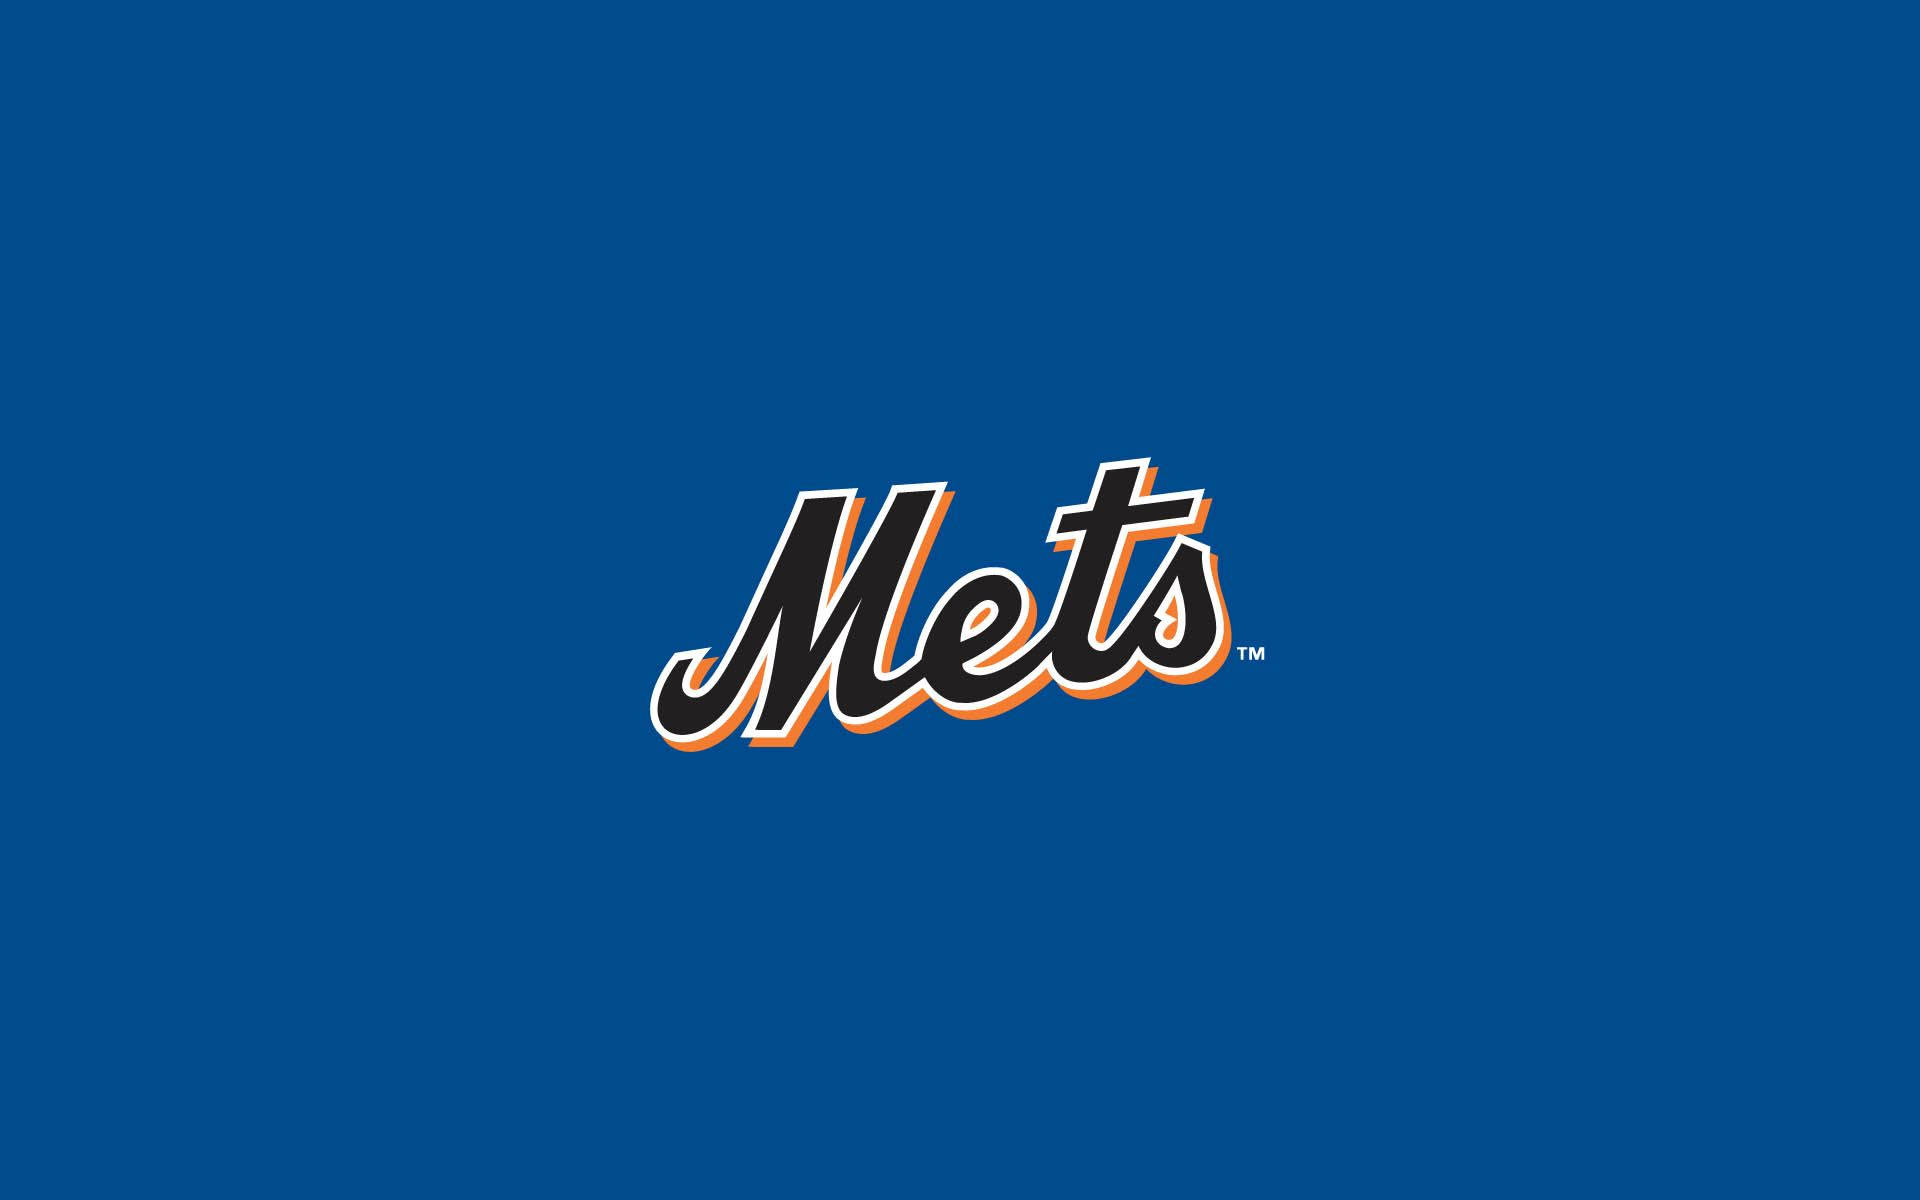 New York Mets Blue Background Wallpaper